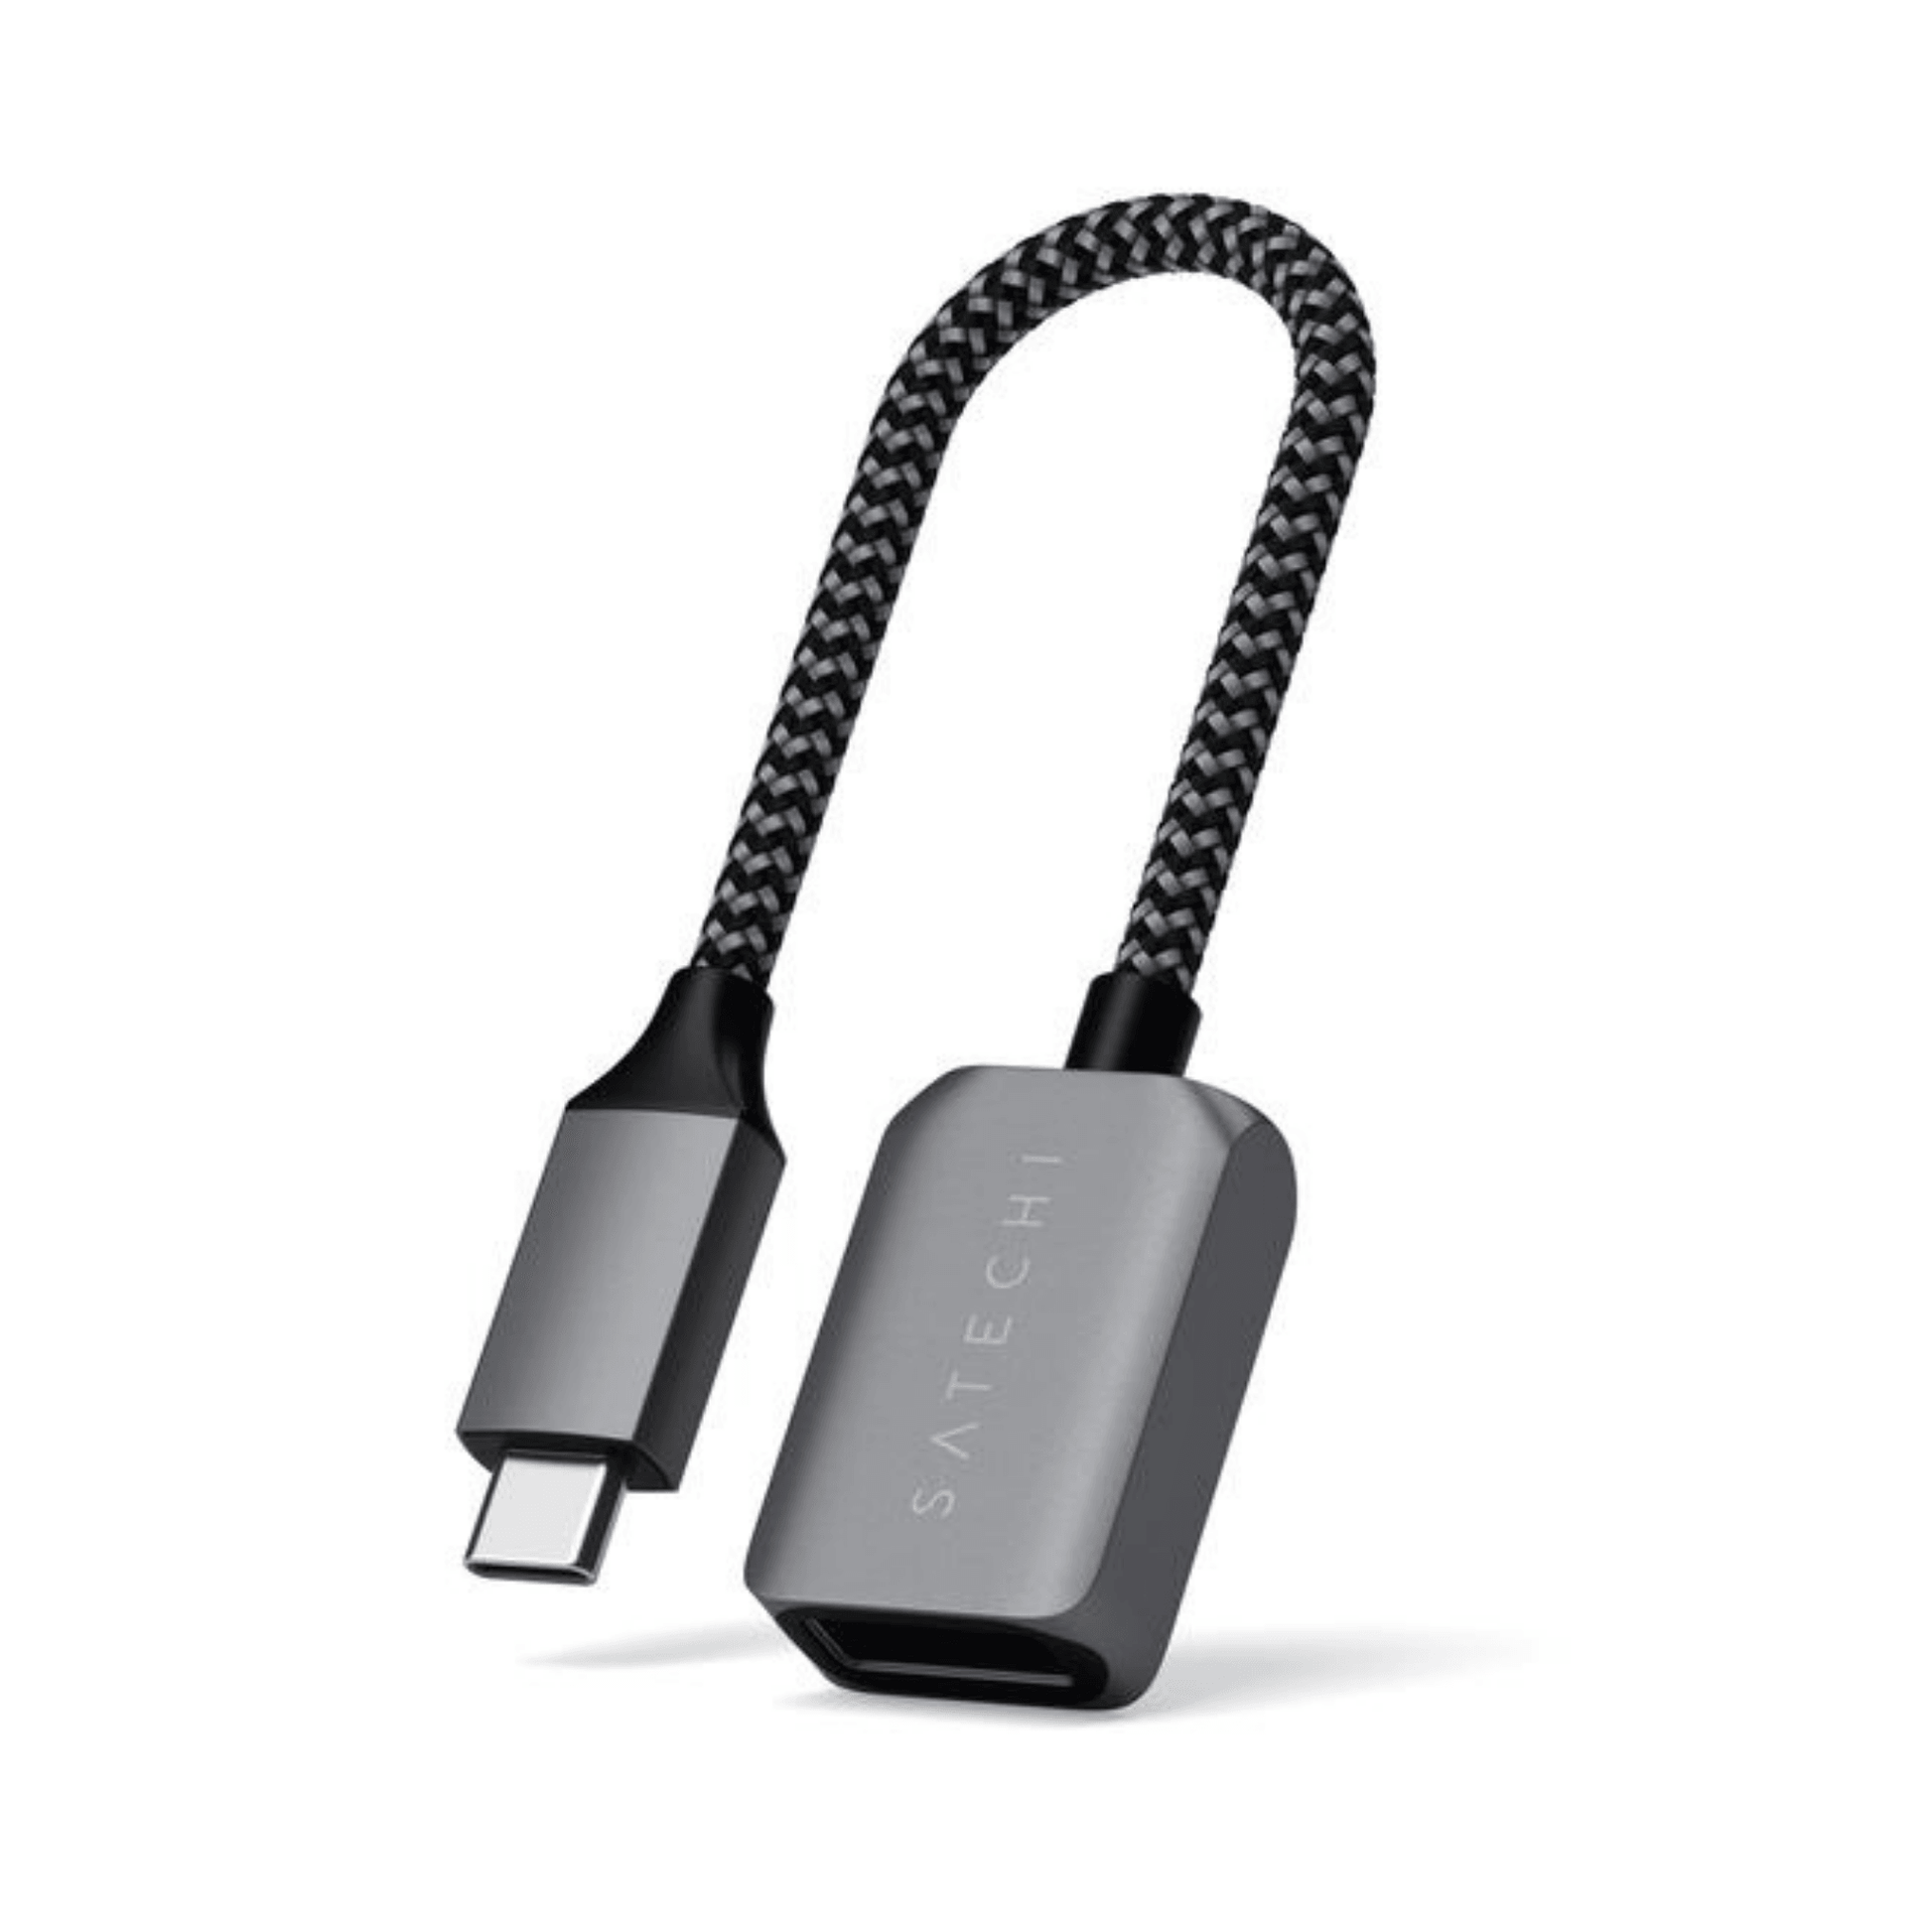 Satechi - Hochwertiges & robustes USB-C zu USB 3.0 Adapterkabel - Space Gray / Grau